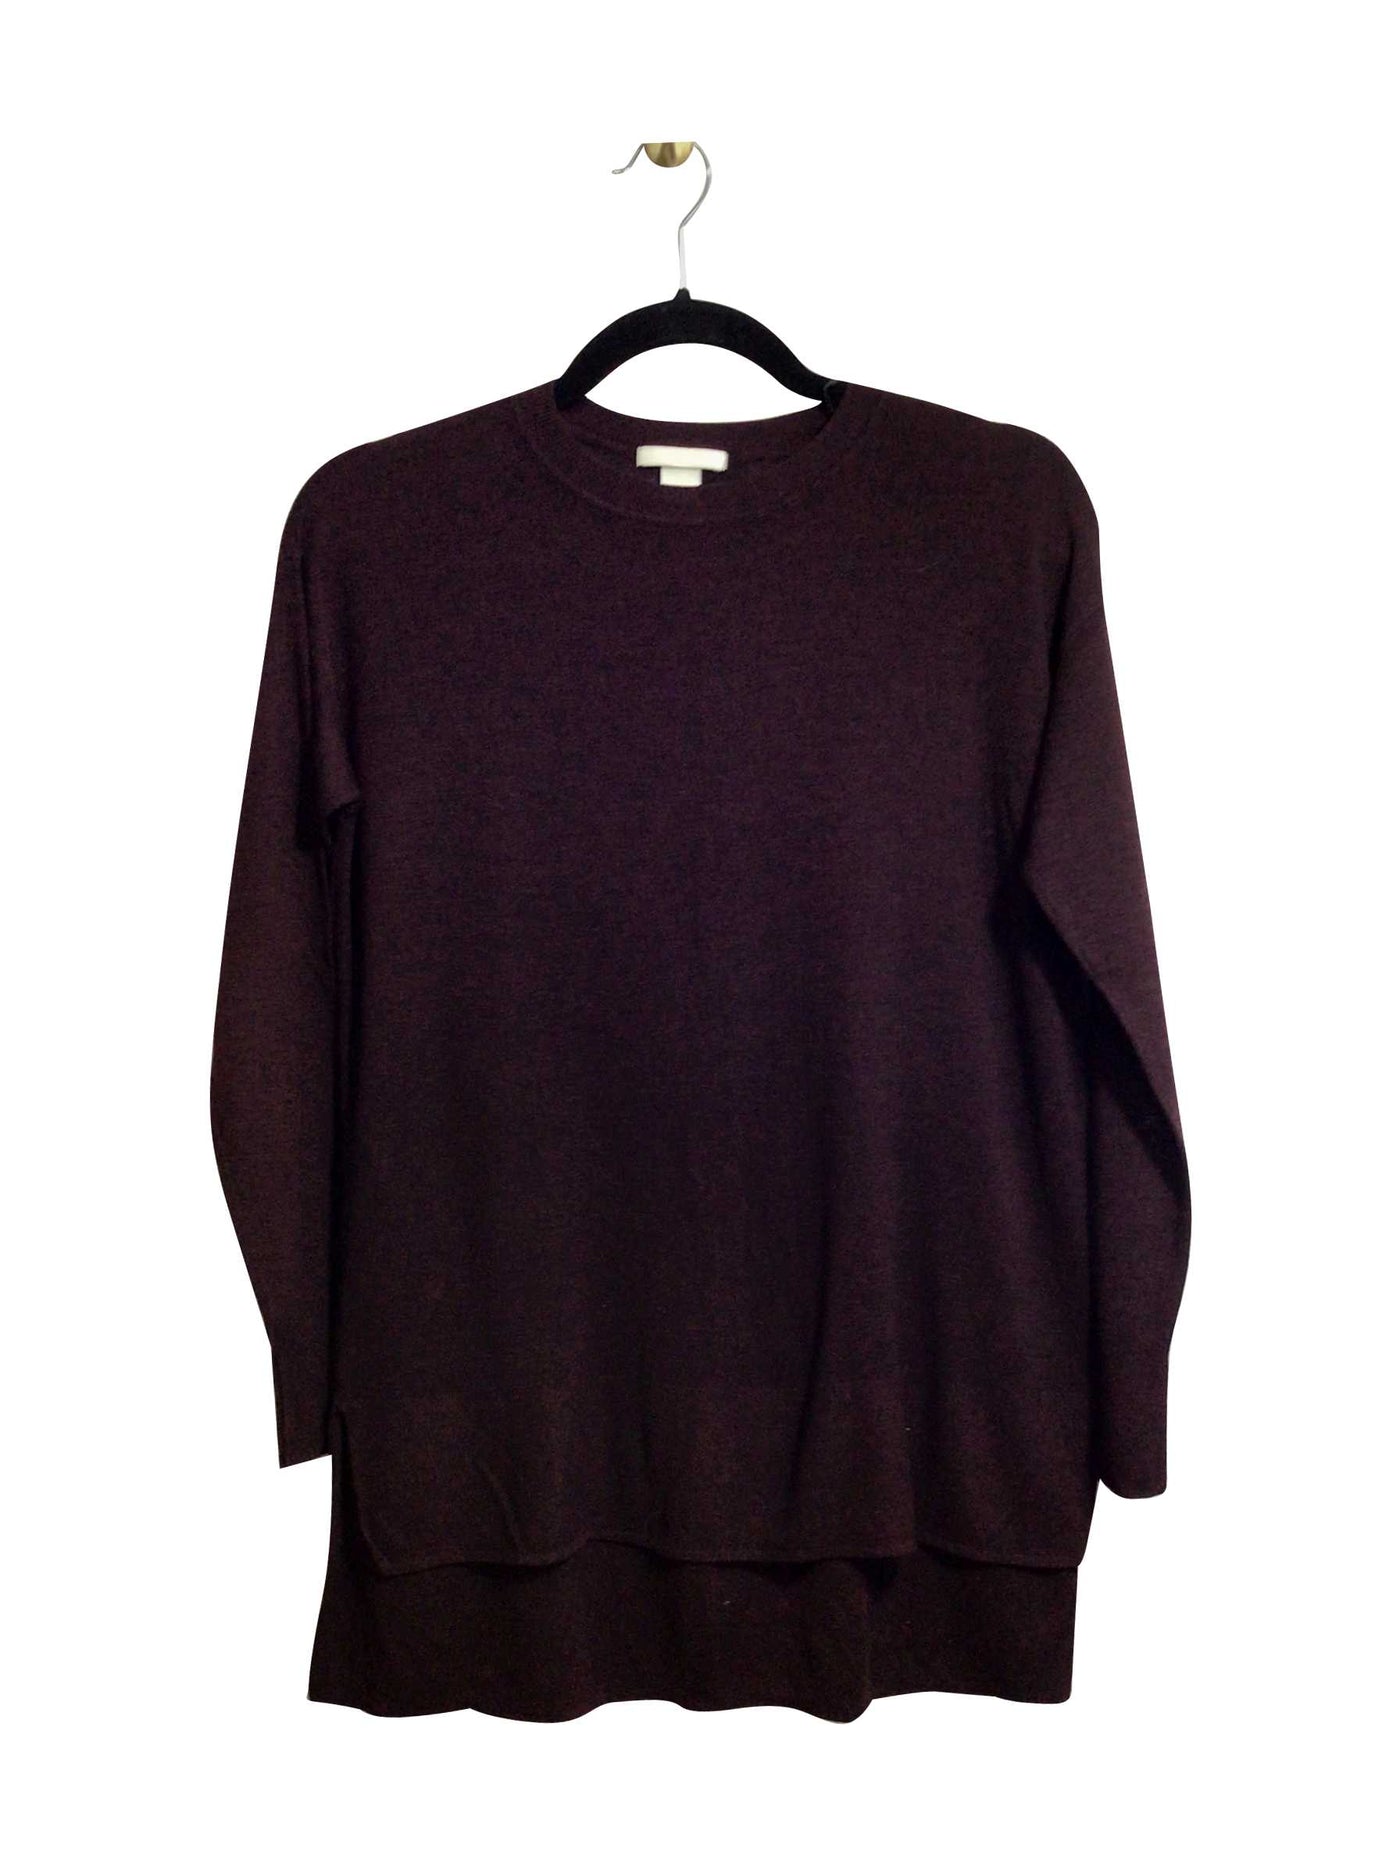 H&M Regular fit T-shirt in Red - Size S | 7.99 $ KOOP